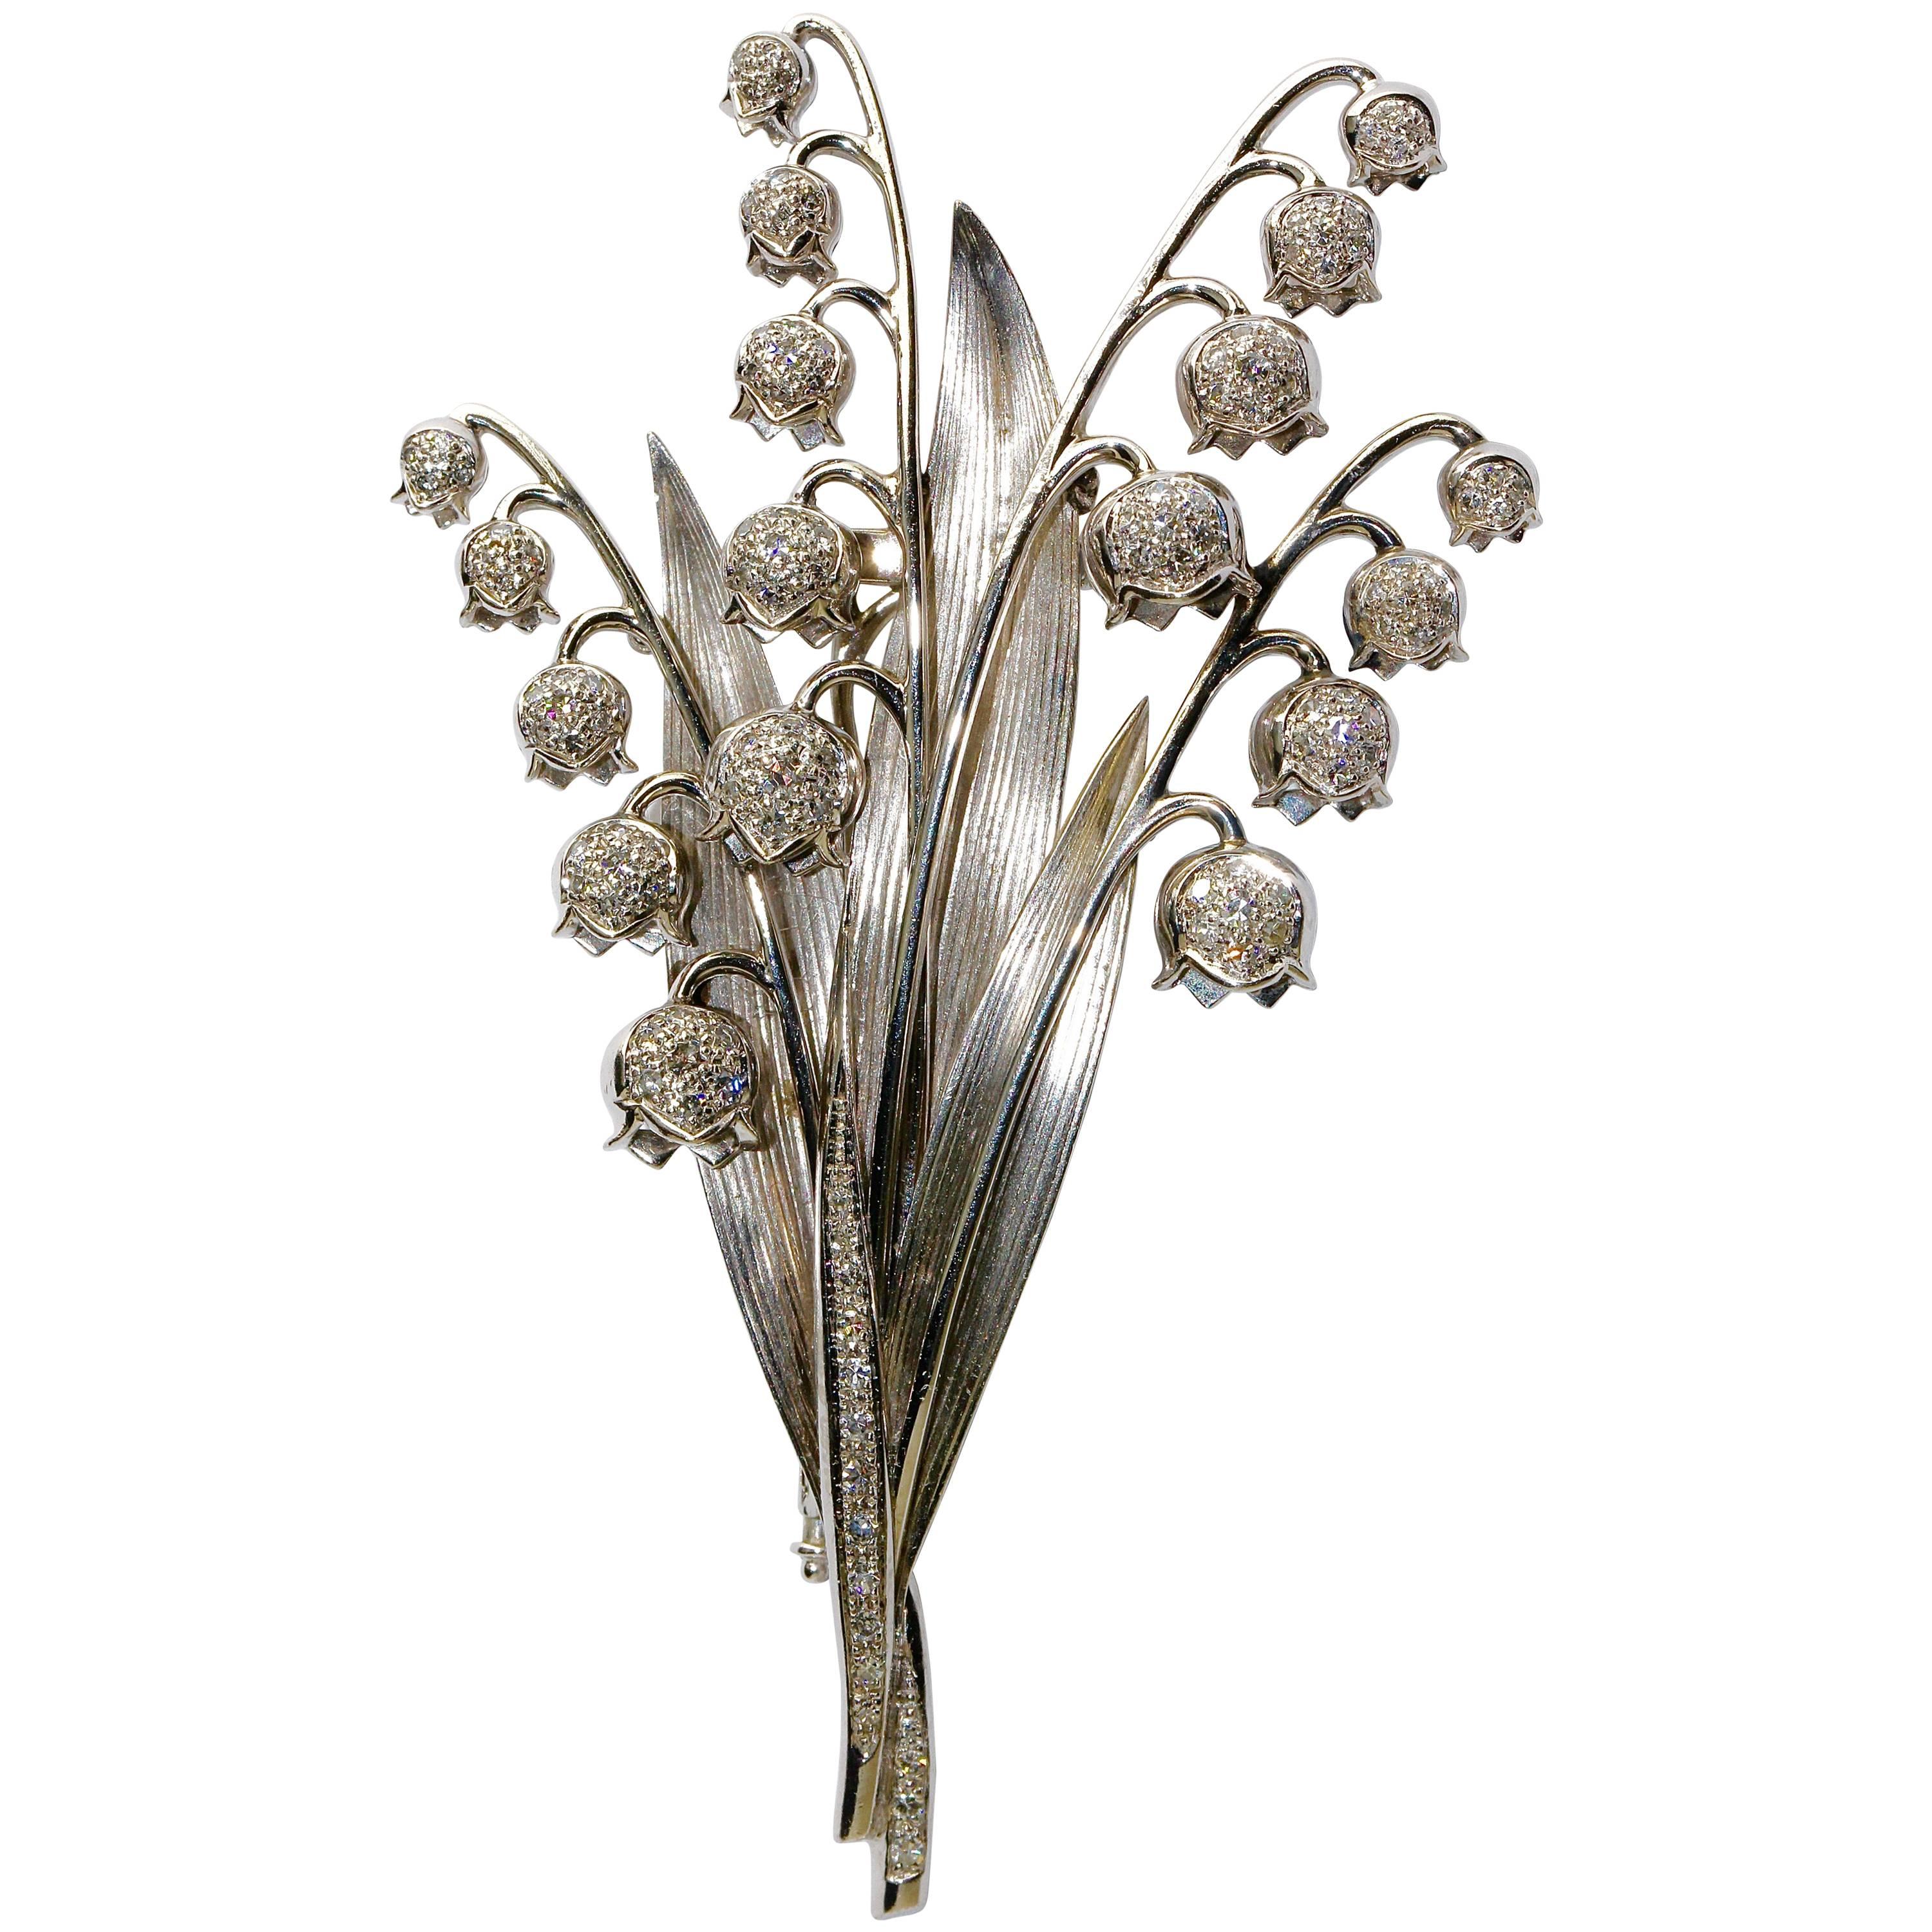 18 Karat White Gold Brooch with Diamonds, Floral Design